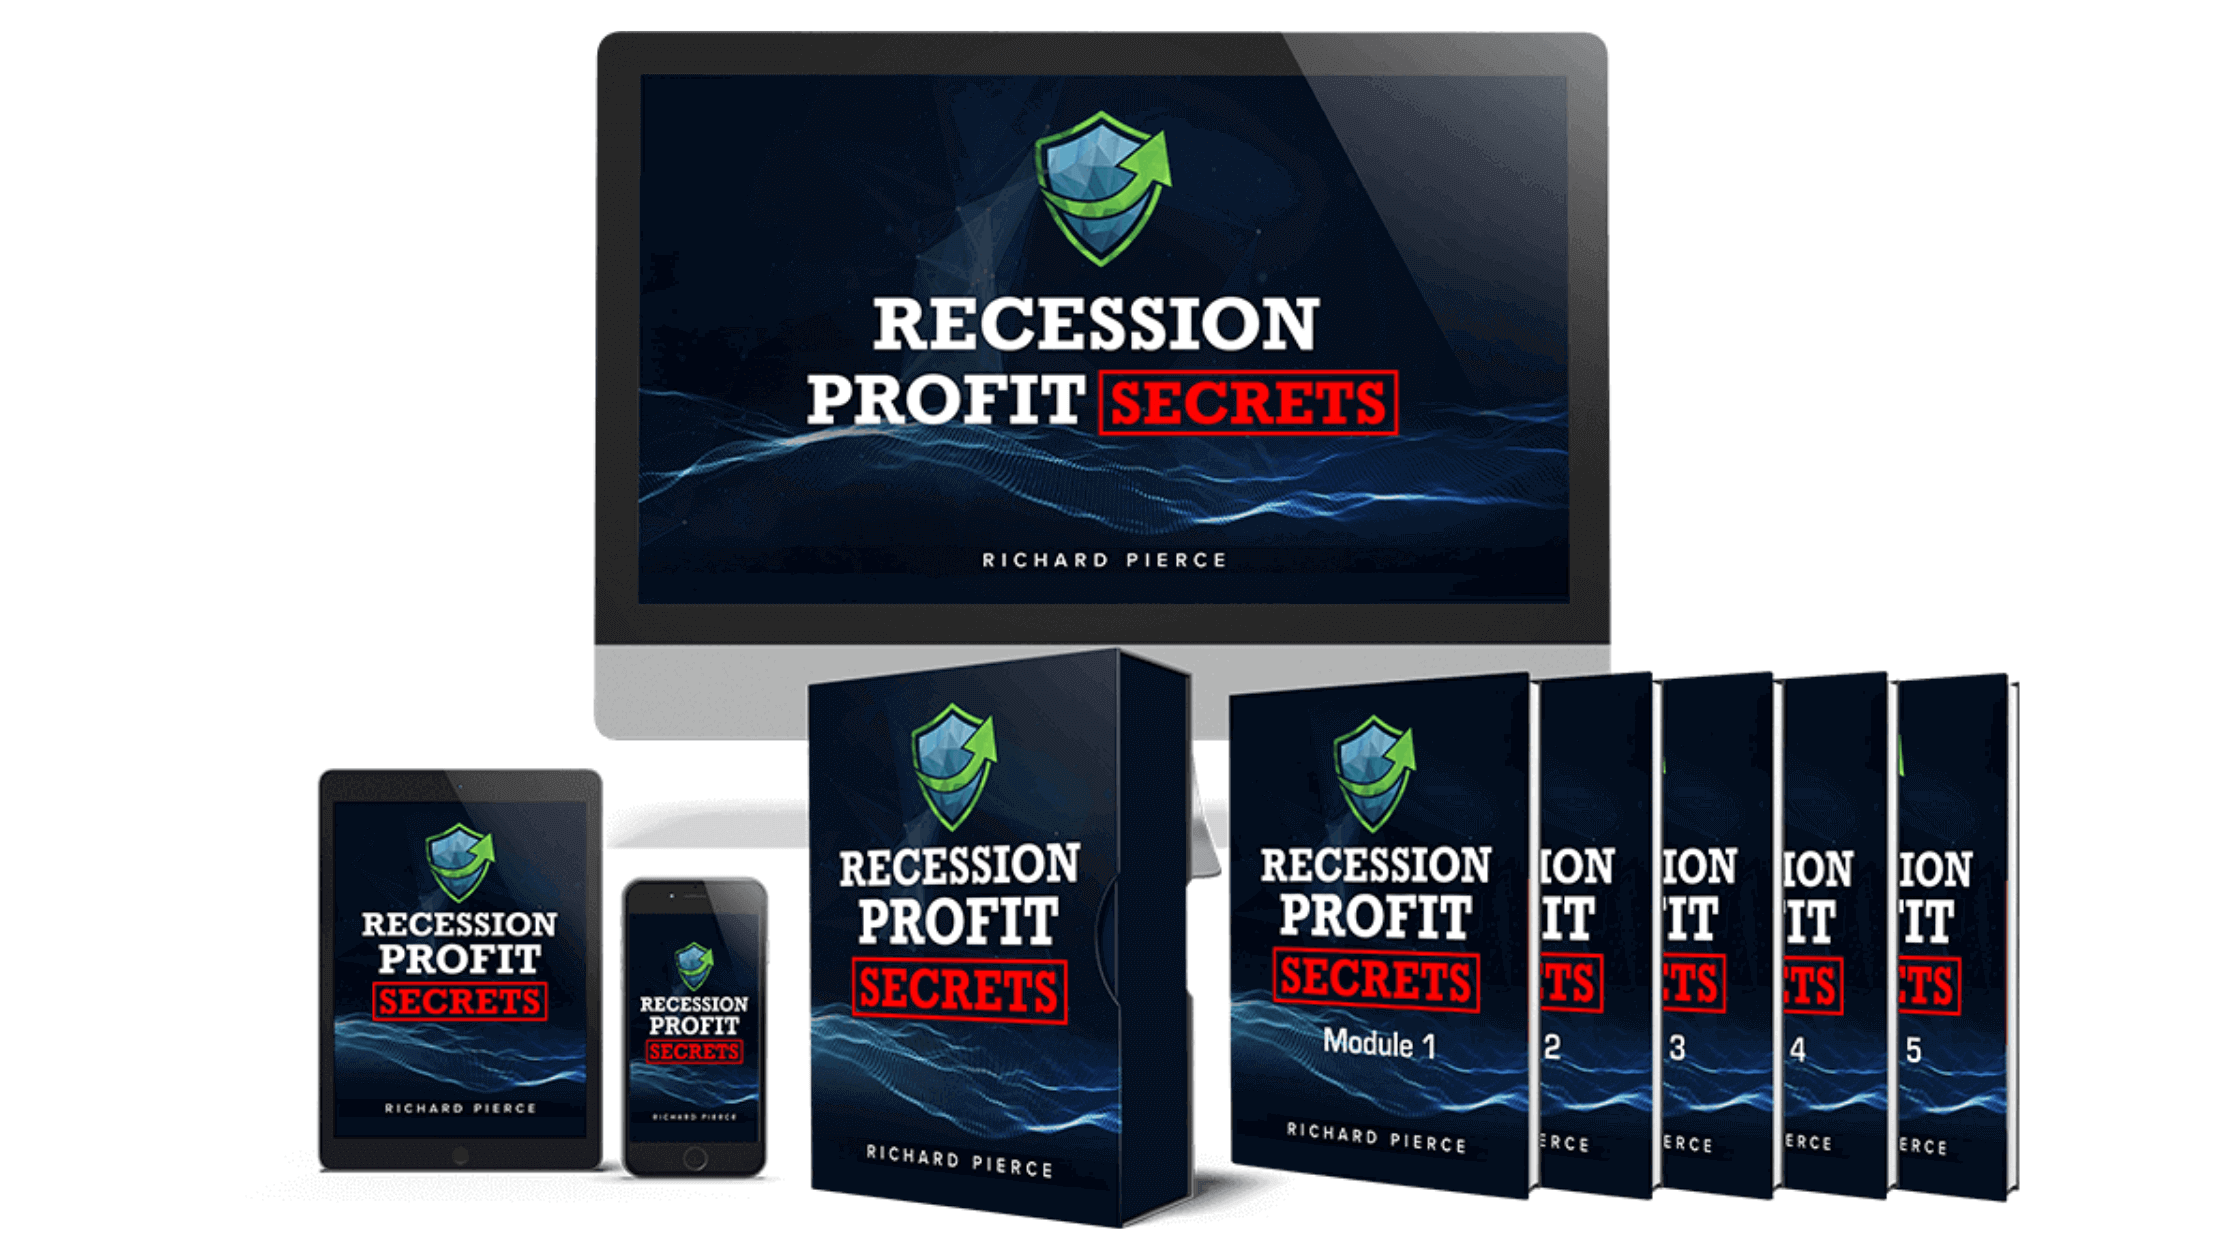 Recession Profit Secrets Modules